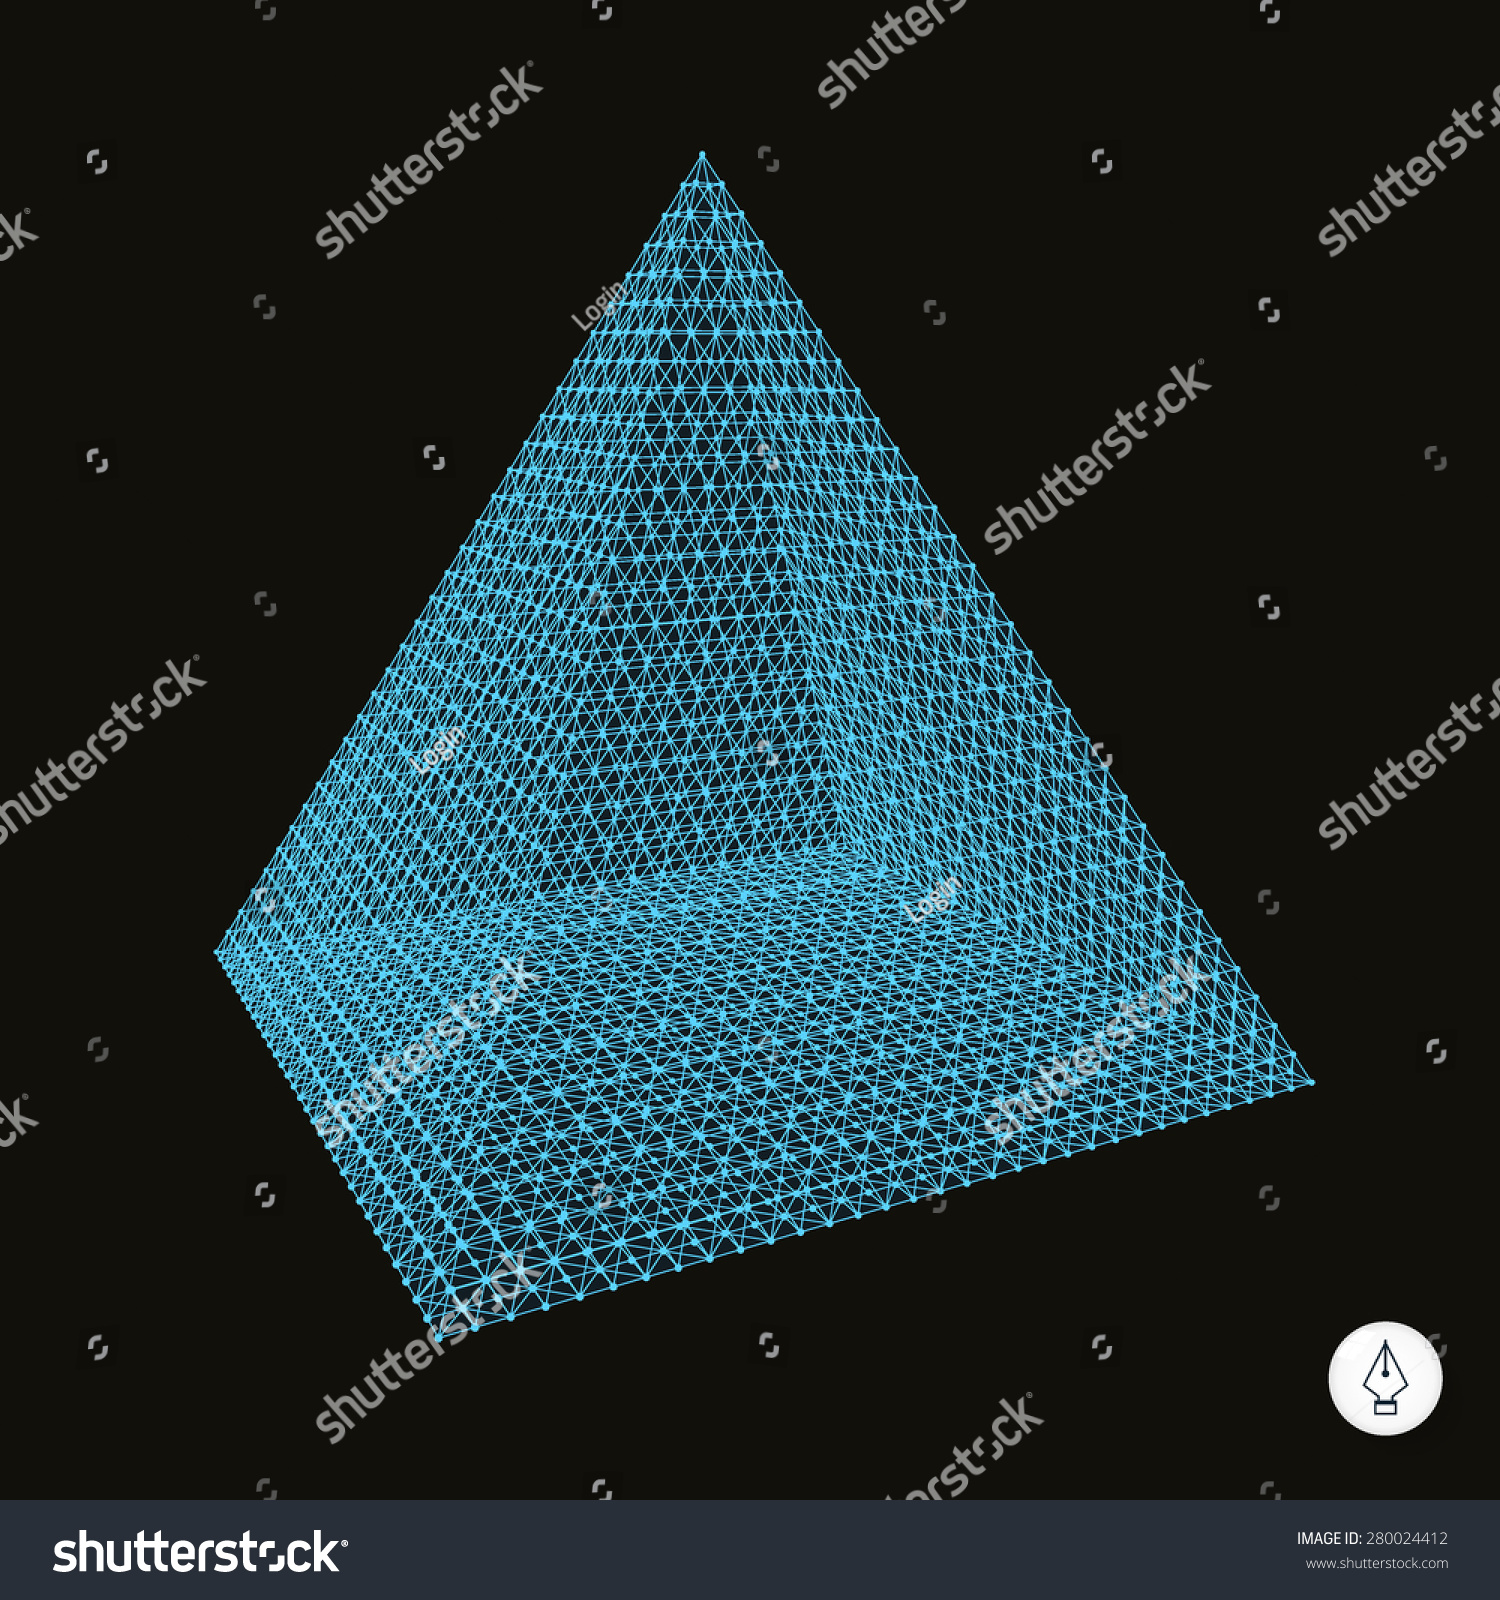 Pyramid 3d Vector Illustration Can Be Stock Vector 280024412 - Shutterstock